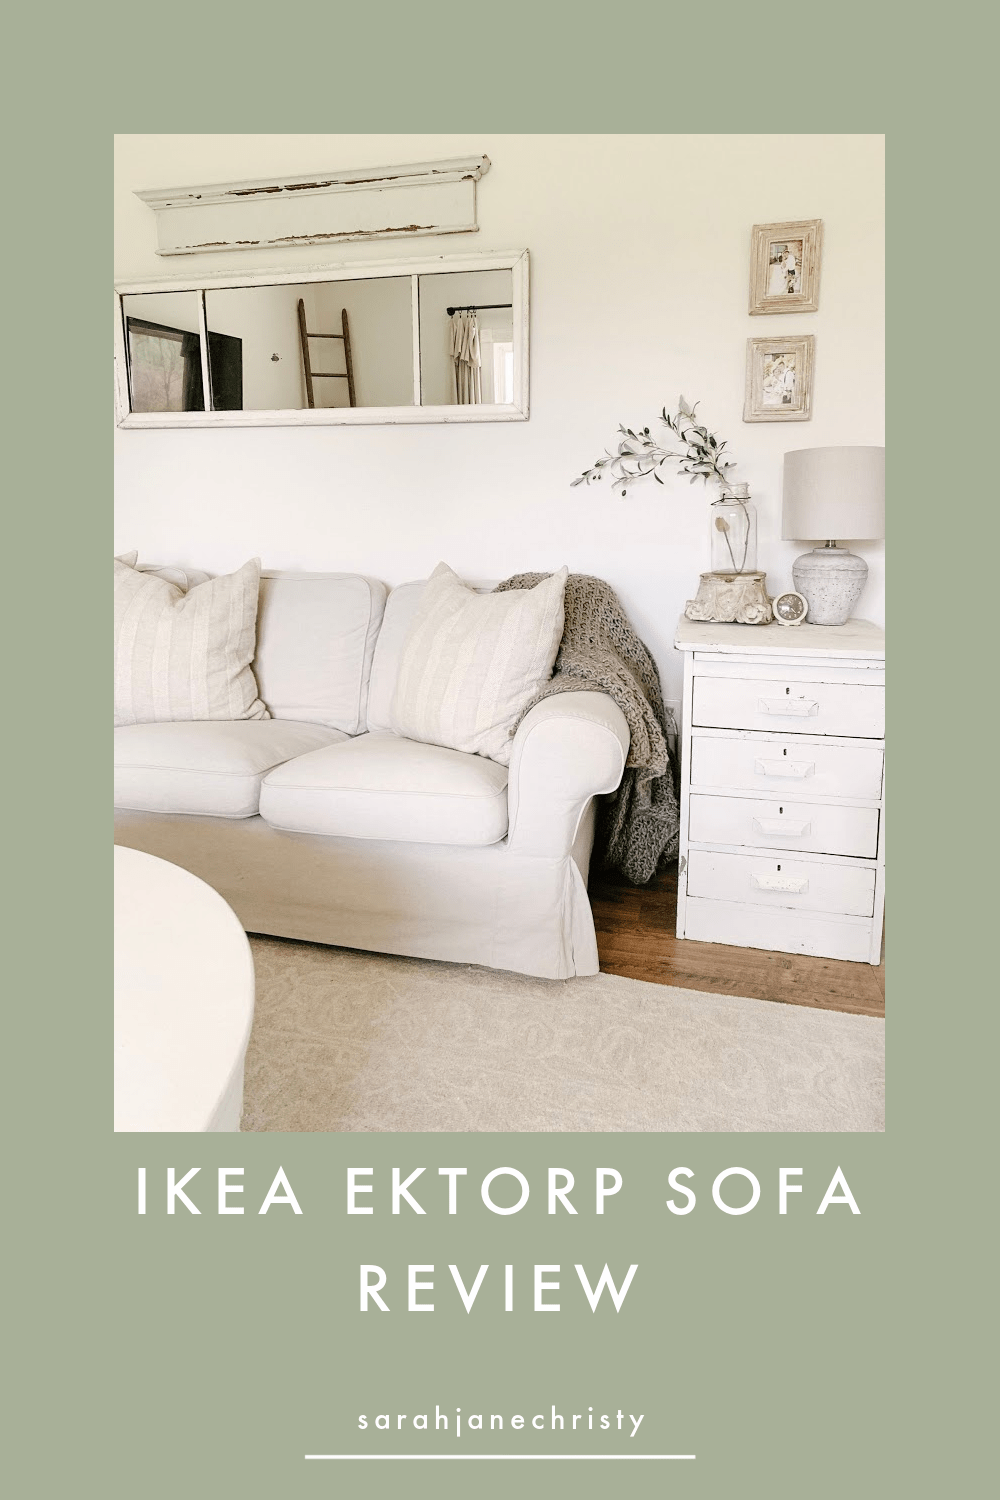 IKEA Ektorp Sofa Review - Sarah Jane Christy